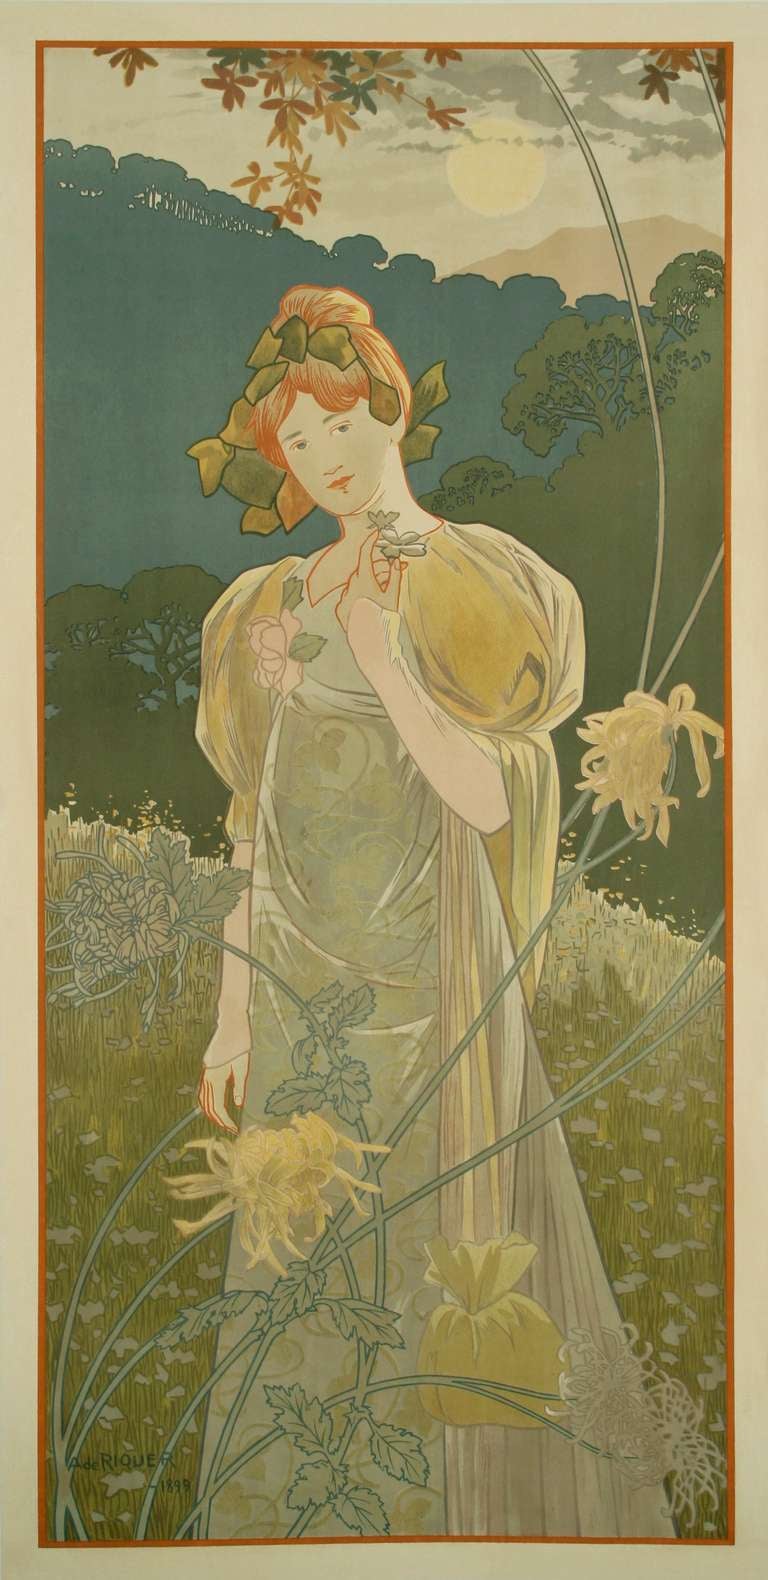 "The Seasons," a set of four Spanish Art Nouveau period lithographs by Alejandro De Riquer.

De Riquer (1856-1920) was Spain's most successful exponent of the Art Nouveau style. He was known to be quite versatile, working as an